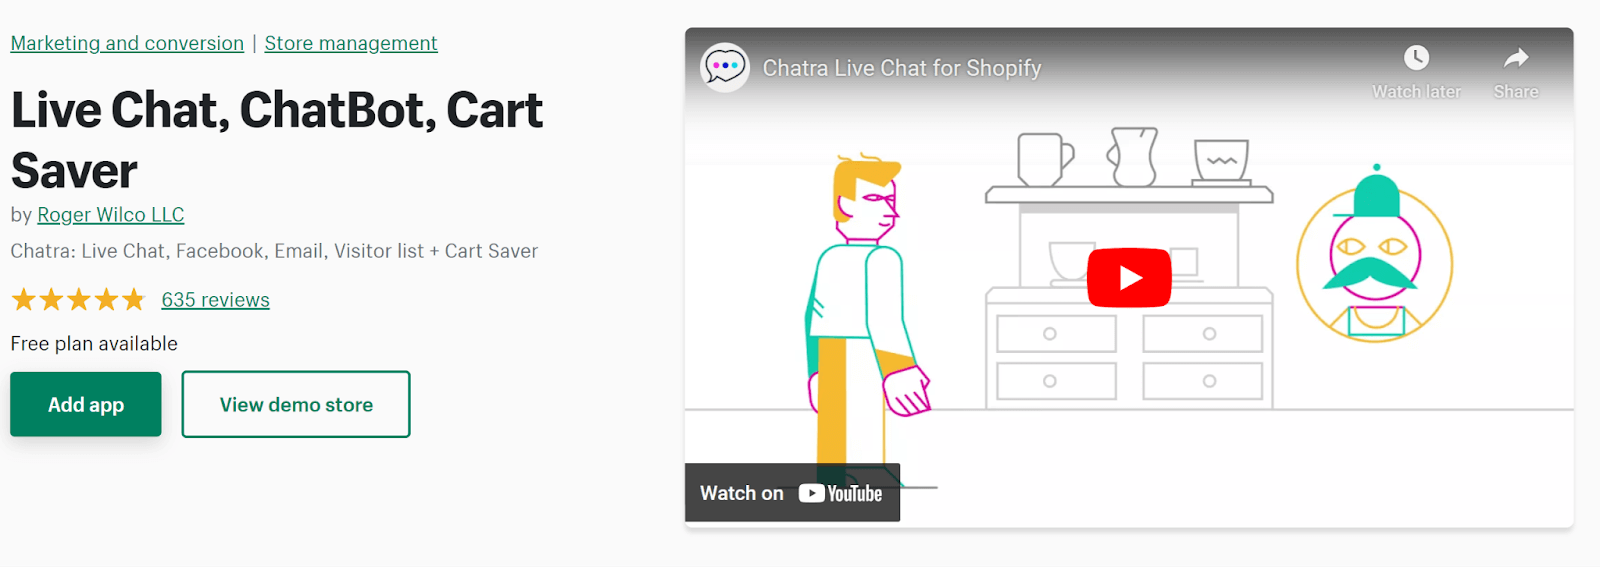 Live Chat, ChatBot, Cart Saver